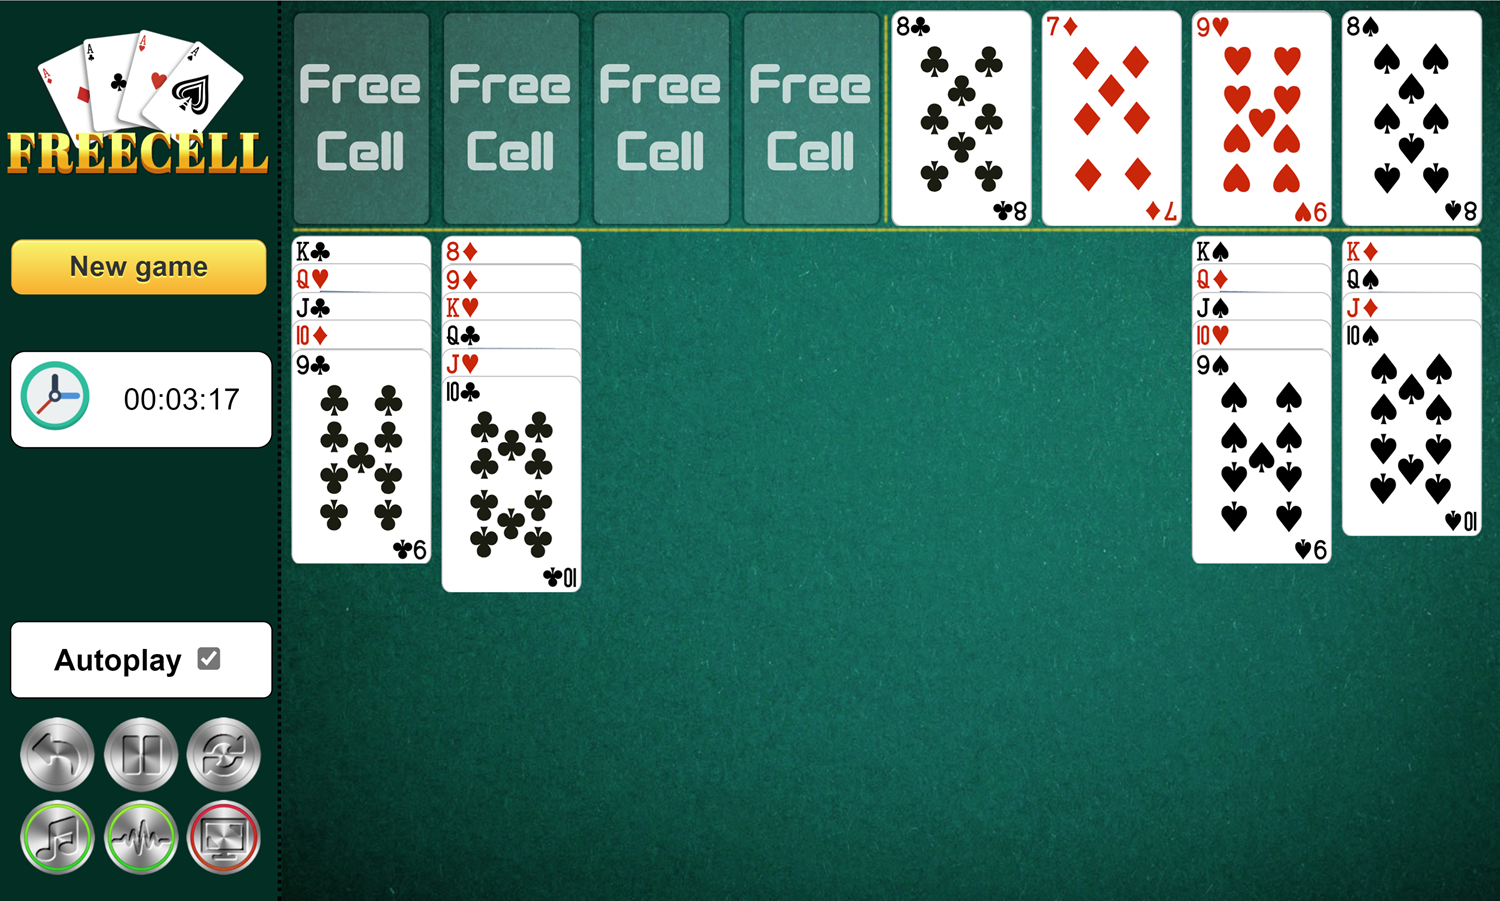 Freecell Game Gameplay Screen Screenshot.